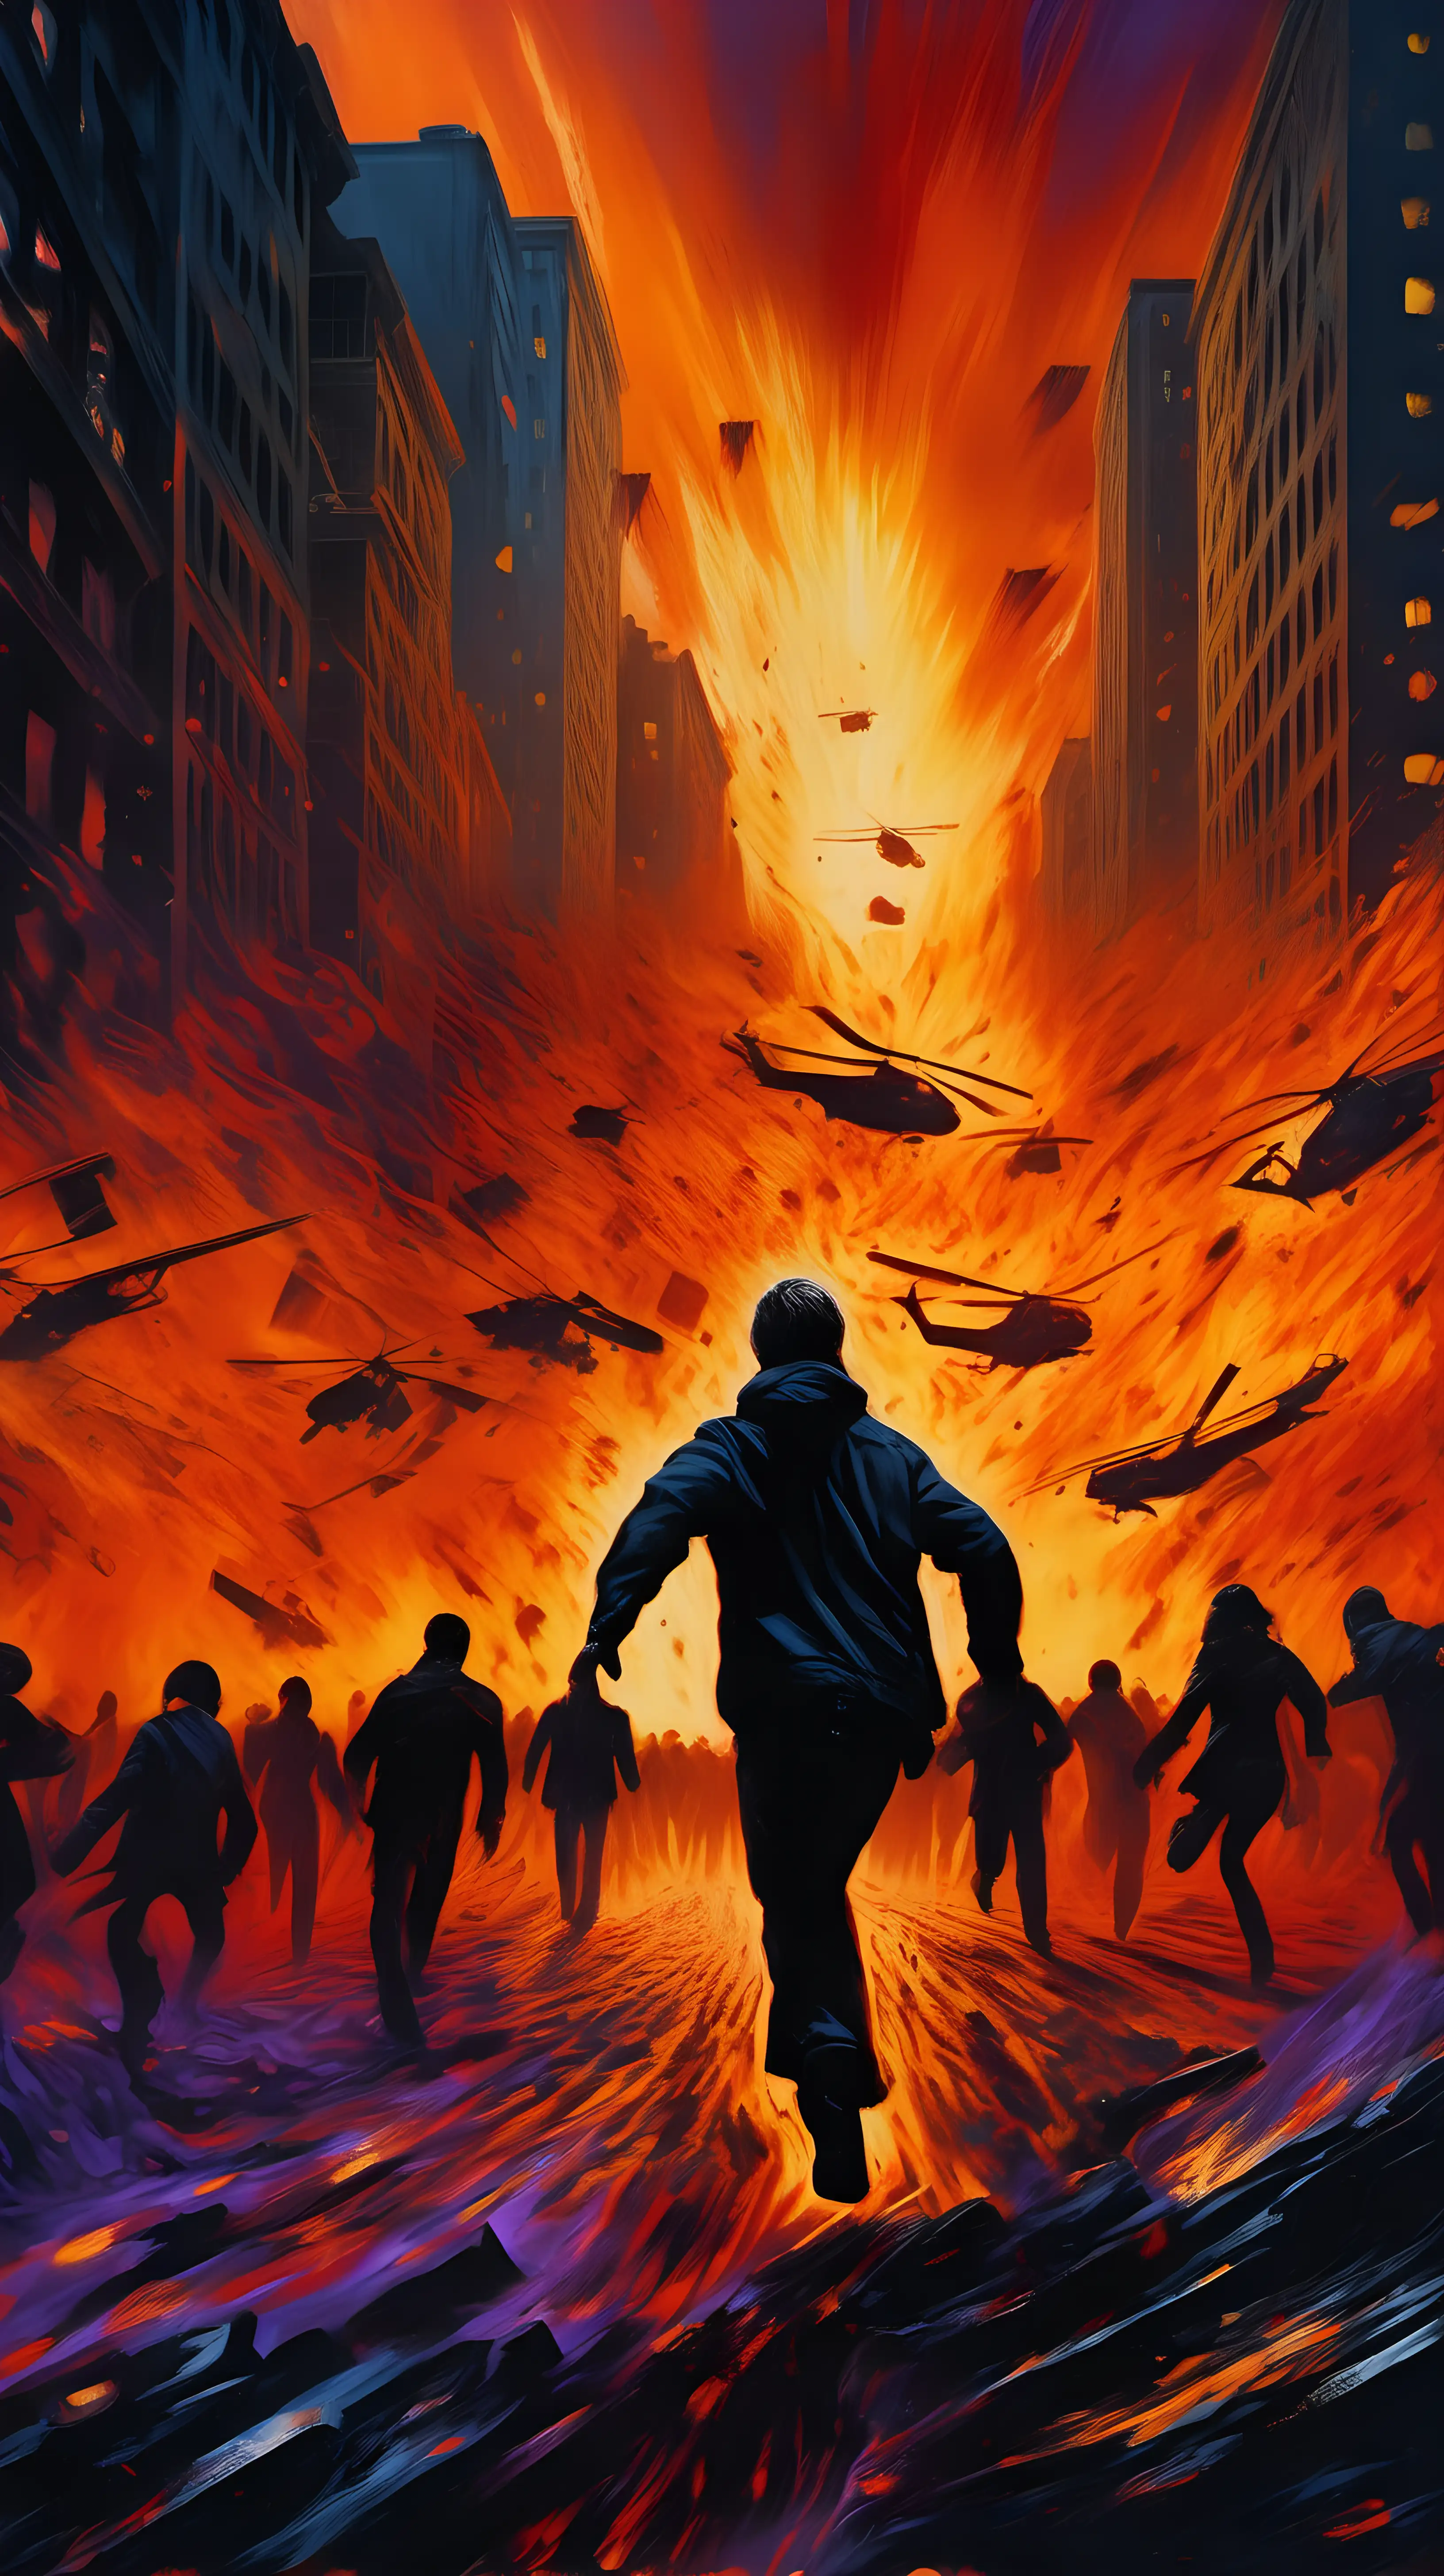 Terrified Crowd Fleeing in Fiery Chaos Explosive Destruction Movie Poster